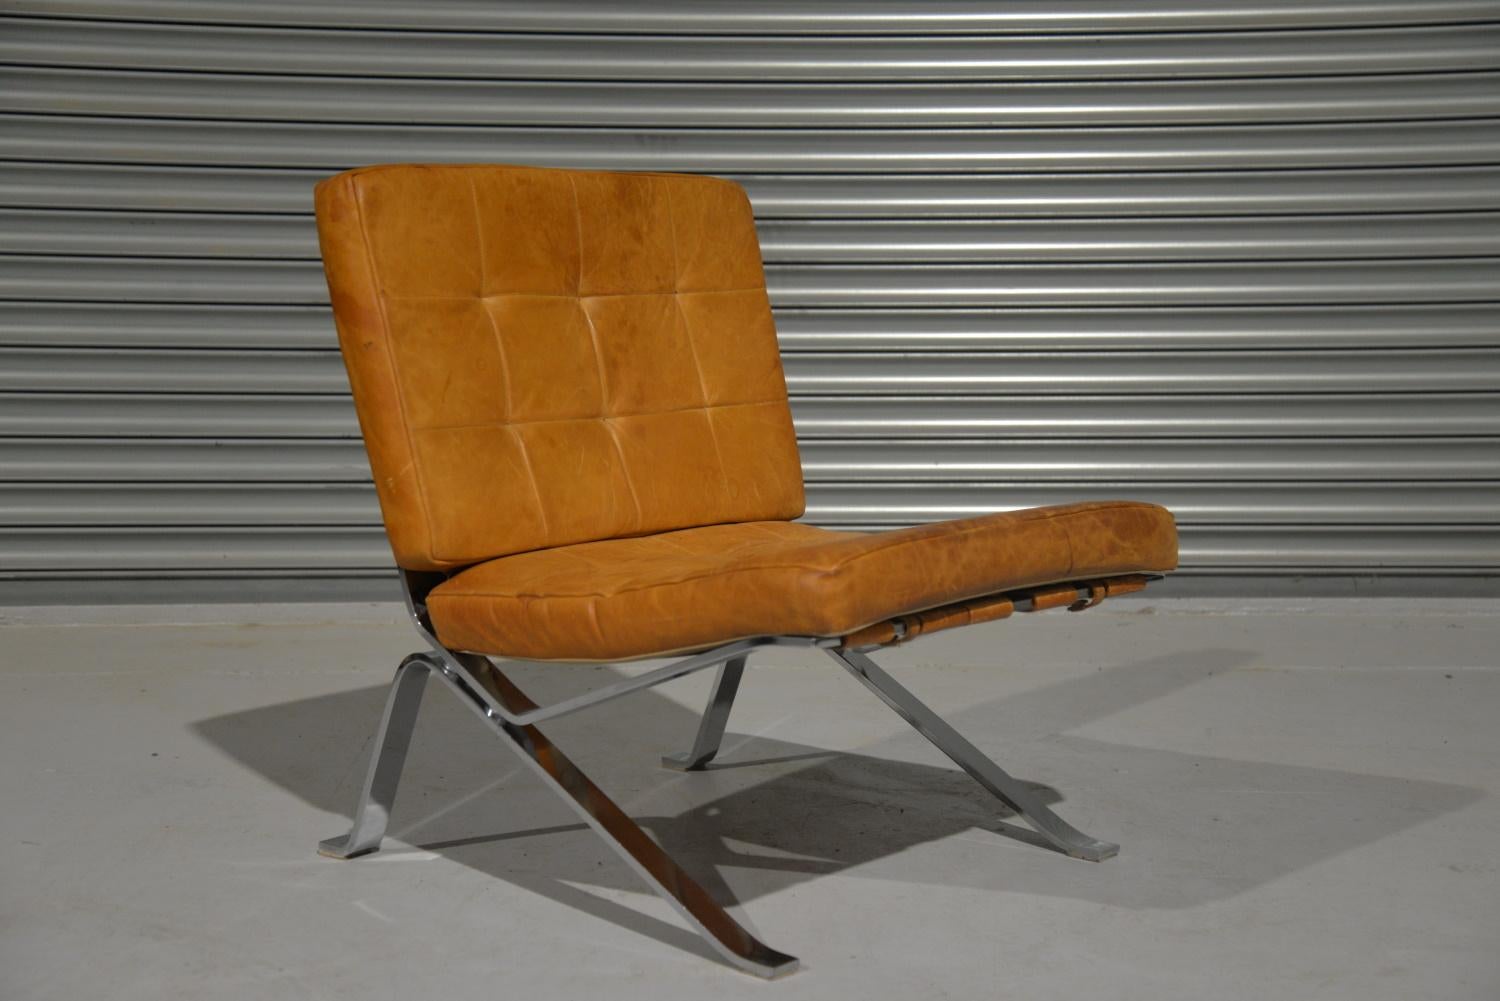 Vintage Rh-301 Lounge Chair by Robert Haussmann for De Sede, Switzerland, 1954 For Sale 4